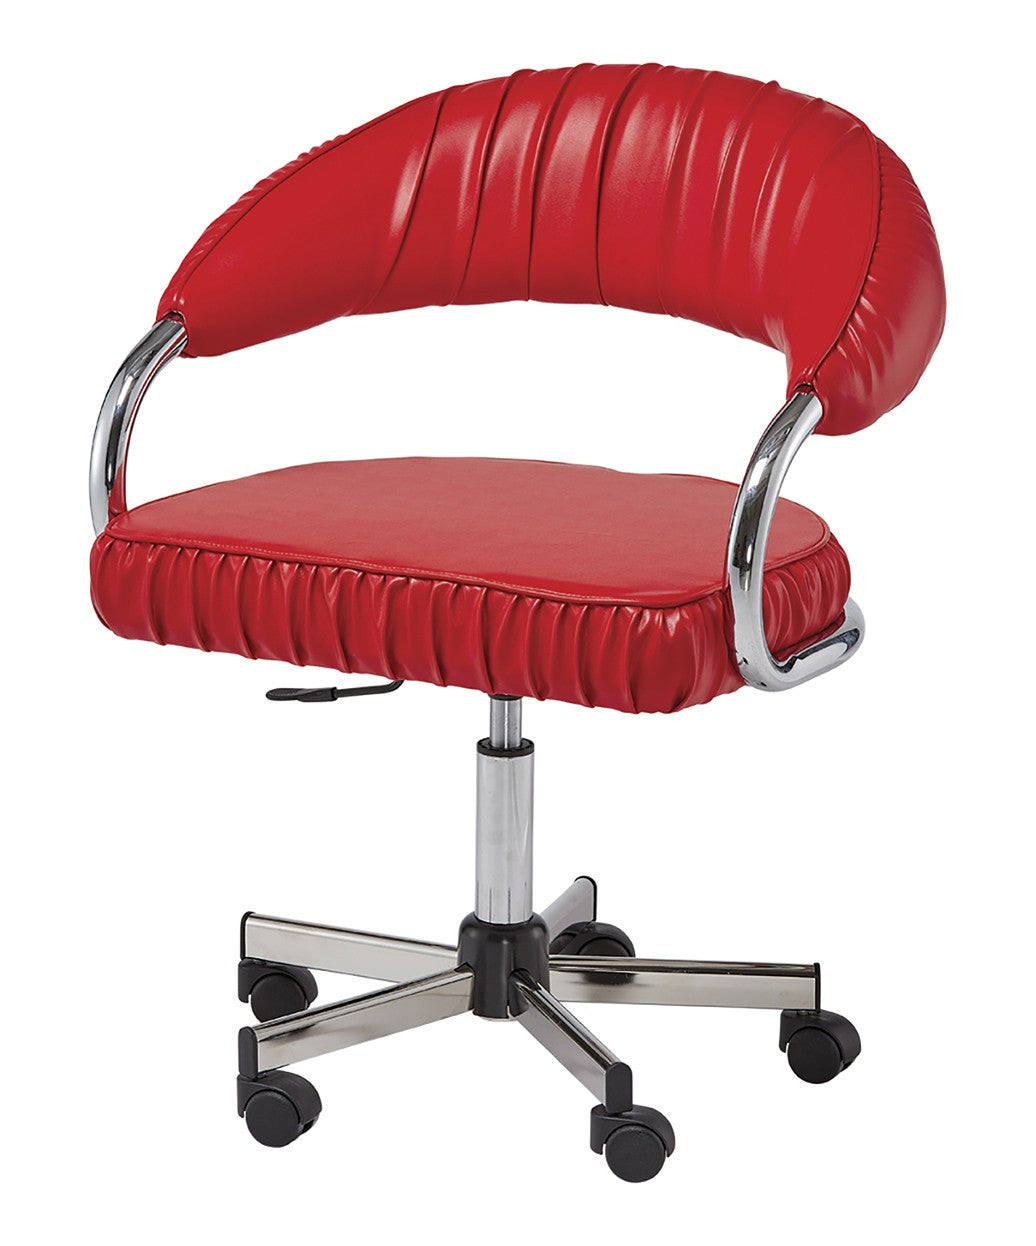 Pibbs Cloud Nine Desk Chair